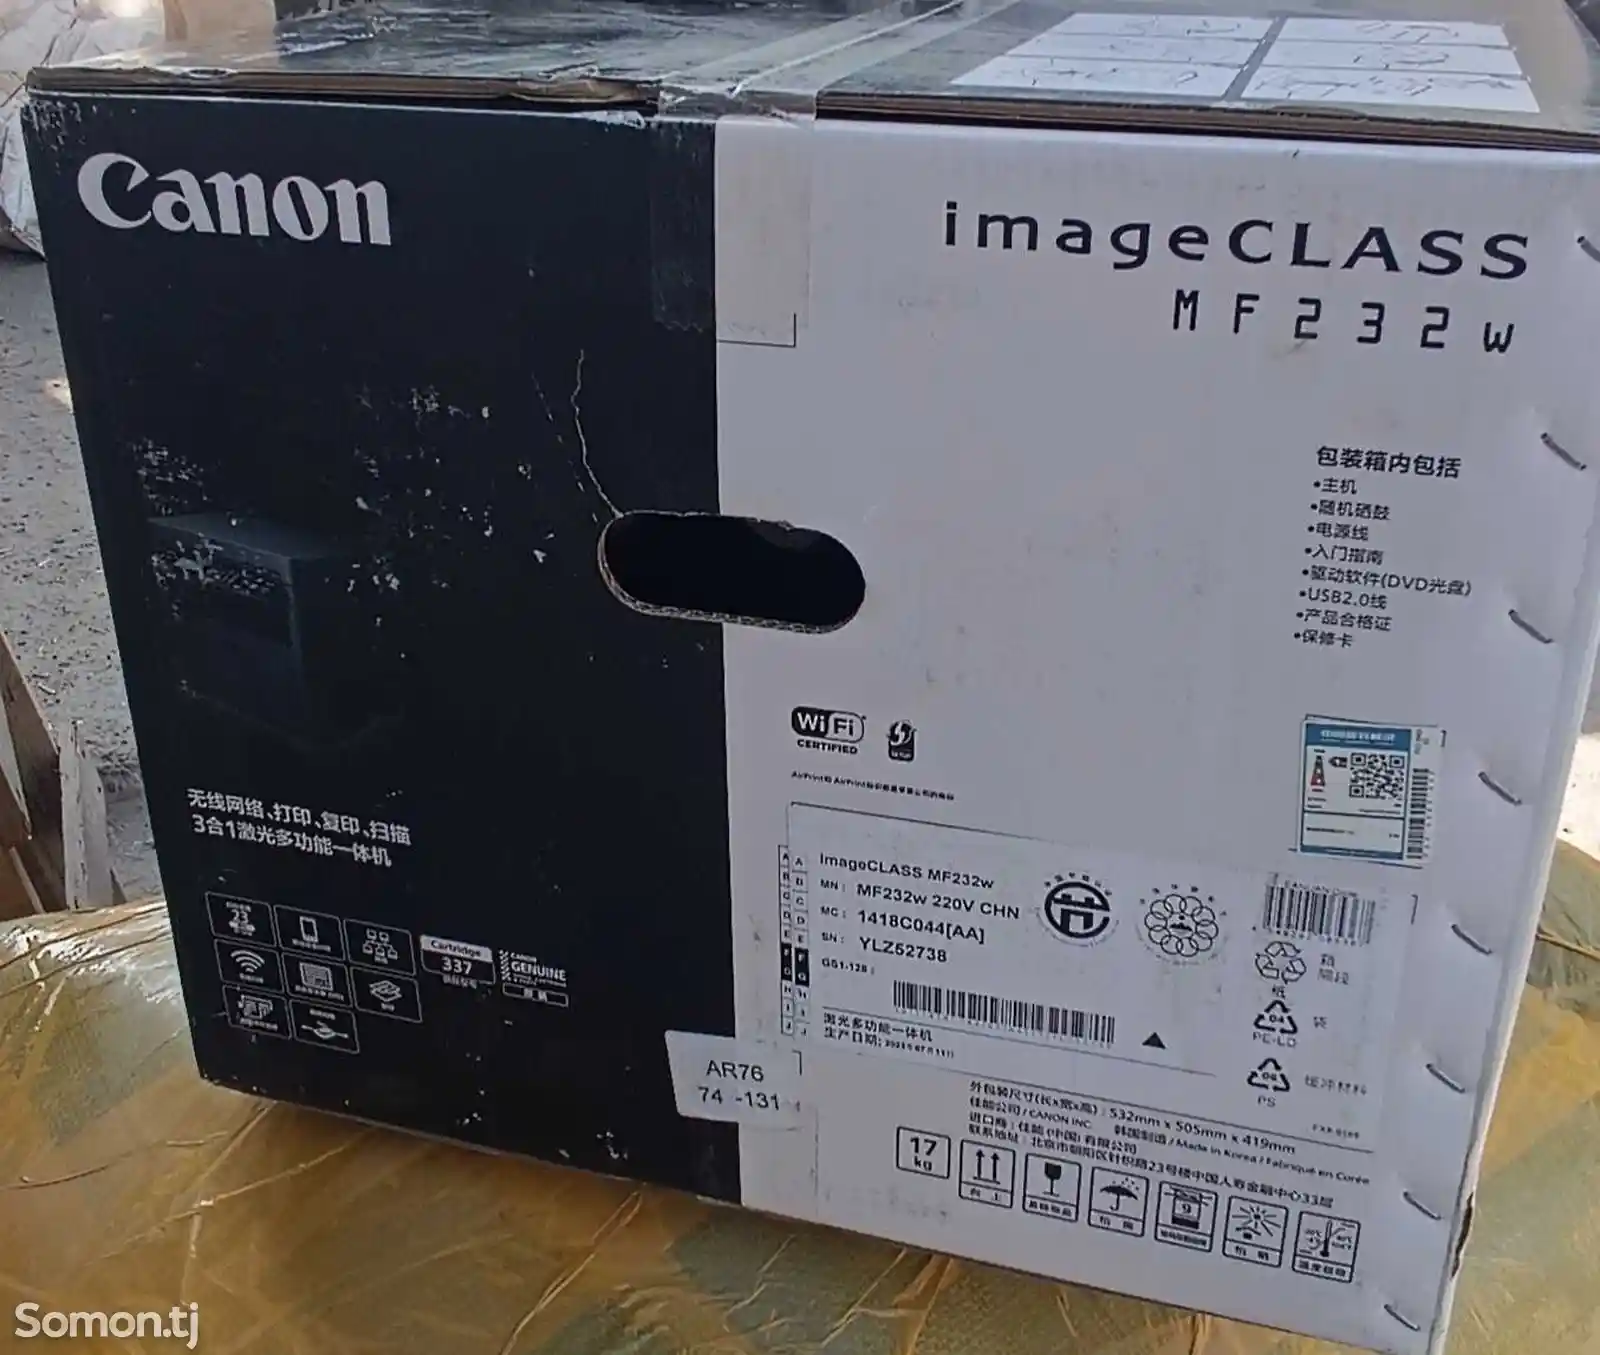 Принтер Canon image Class mf232w с WiFi-3